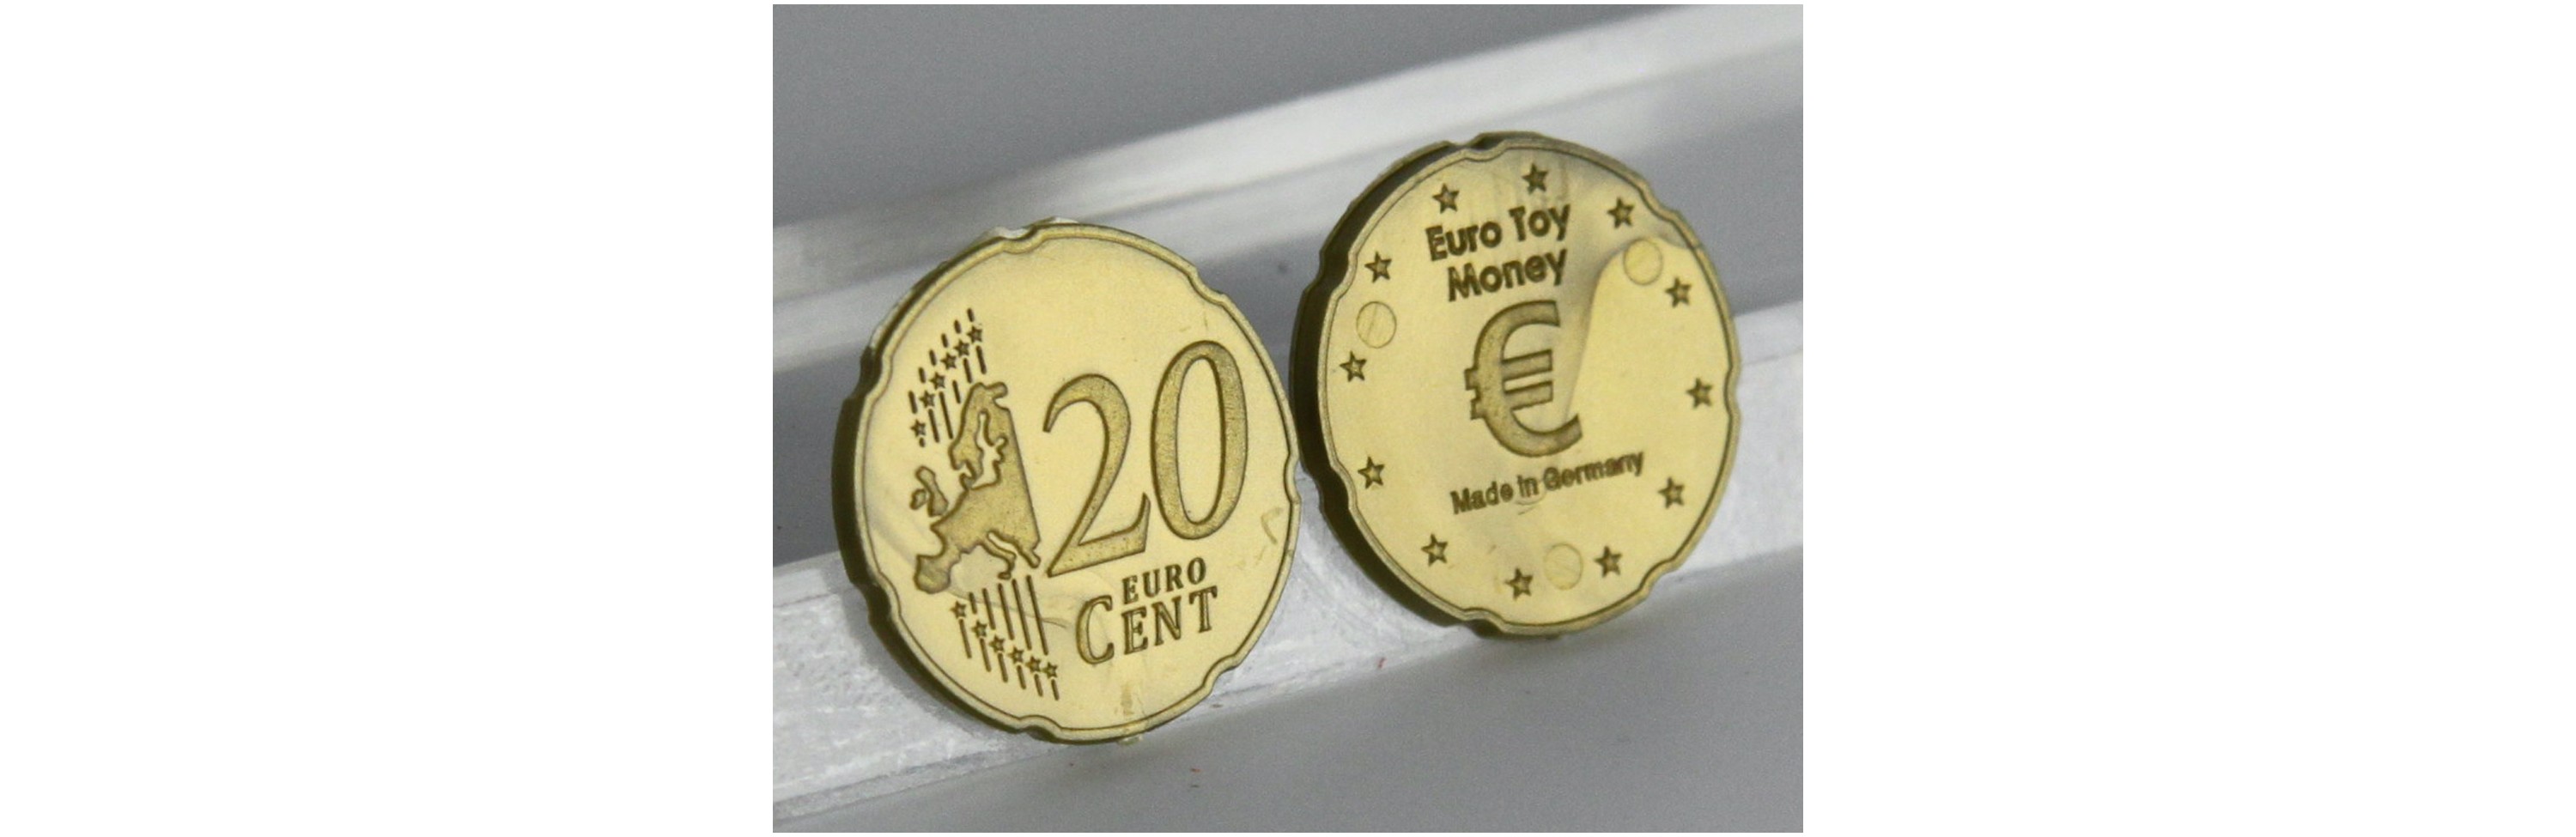 Wissner® aktiv lernen - 20 Euro-Cent (100 Stück) RE-Plastic®